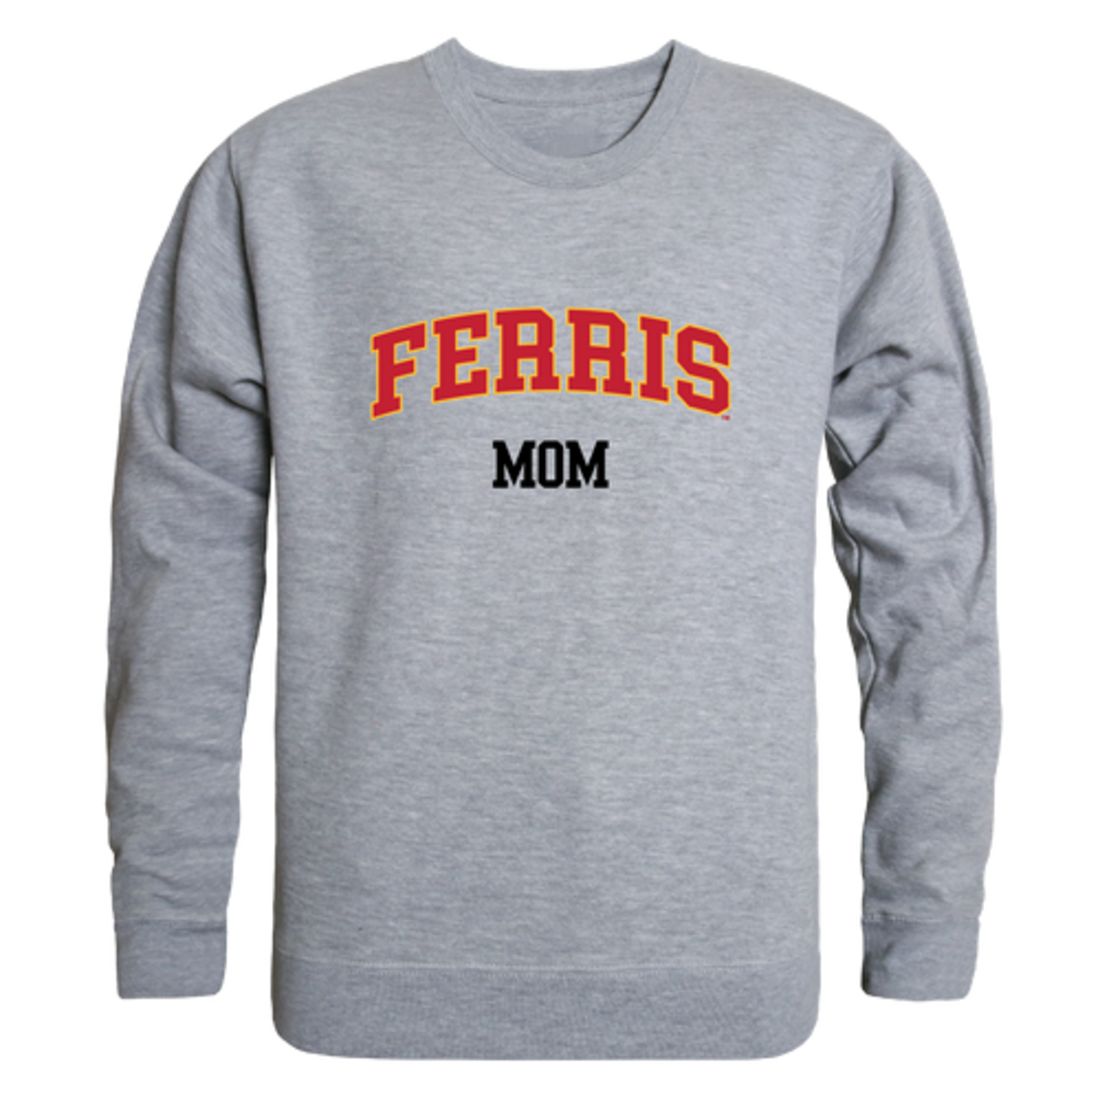 FSU Ferris State University Bulldogs Mom Fleece Crewneck Pullover Sweatshirt Heather Grey Small-Campus-Wardrobe